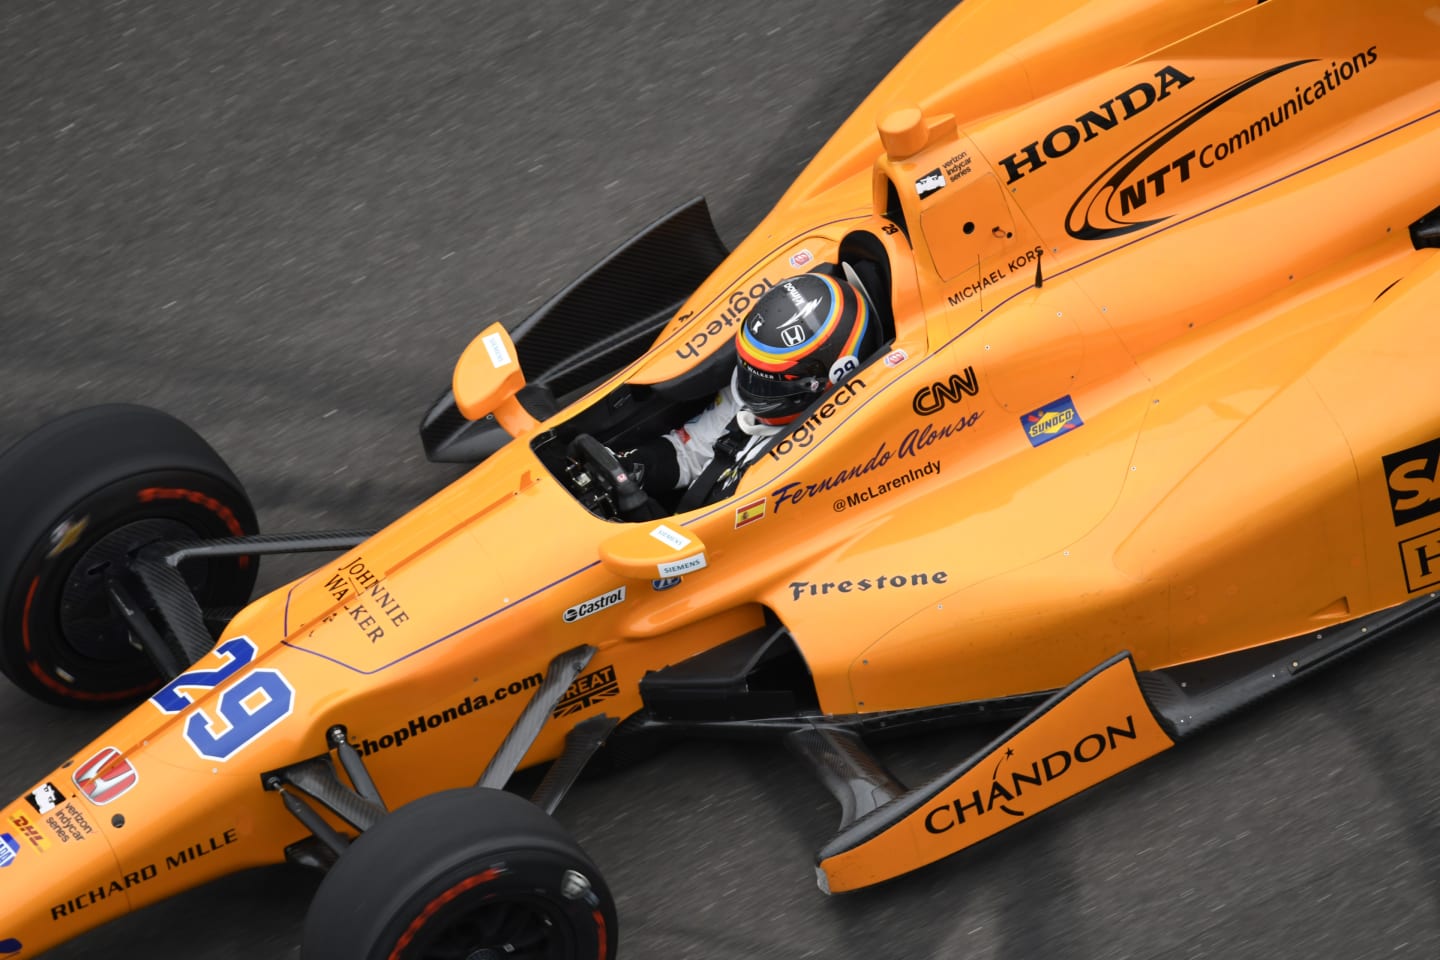 www.sutton-images.com

Fernando Alonso (ESP) McLaren/Andretti Autosport Dallara-Honda at